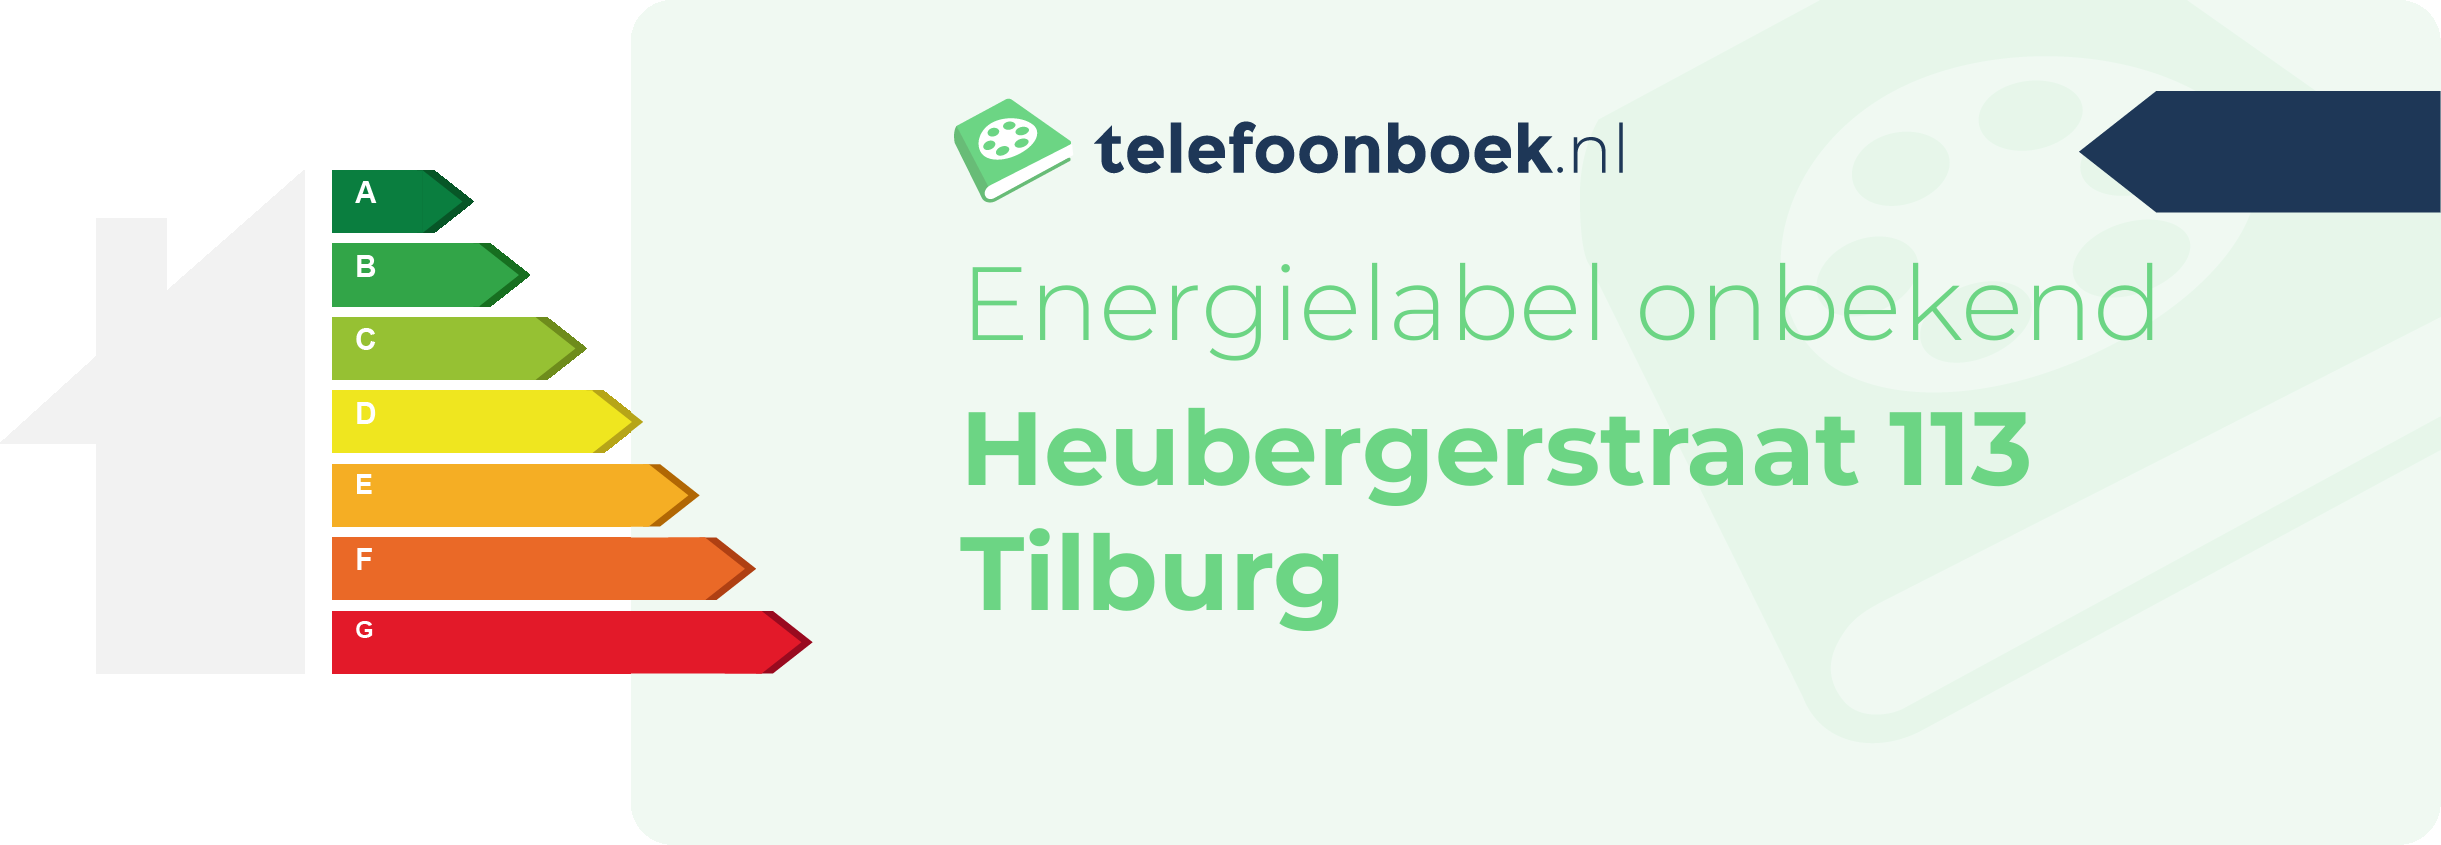 Energielabel Heubergerstraat 113 Tilburg